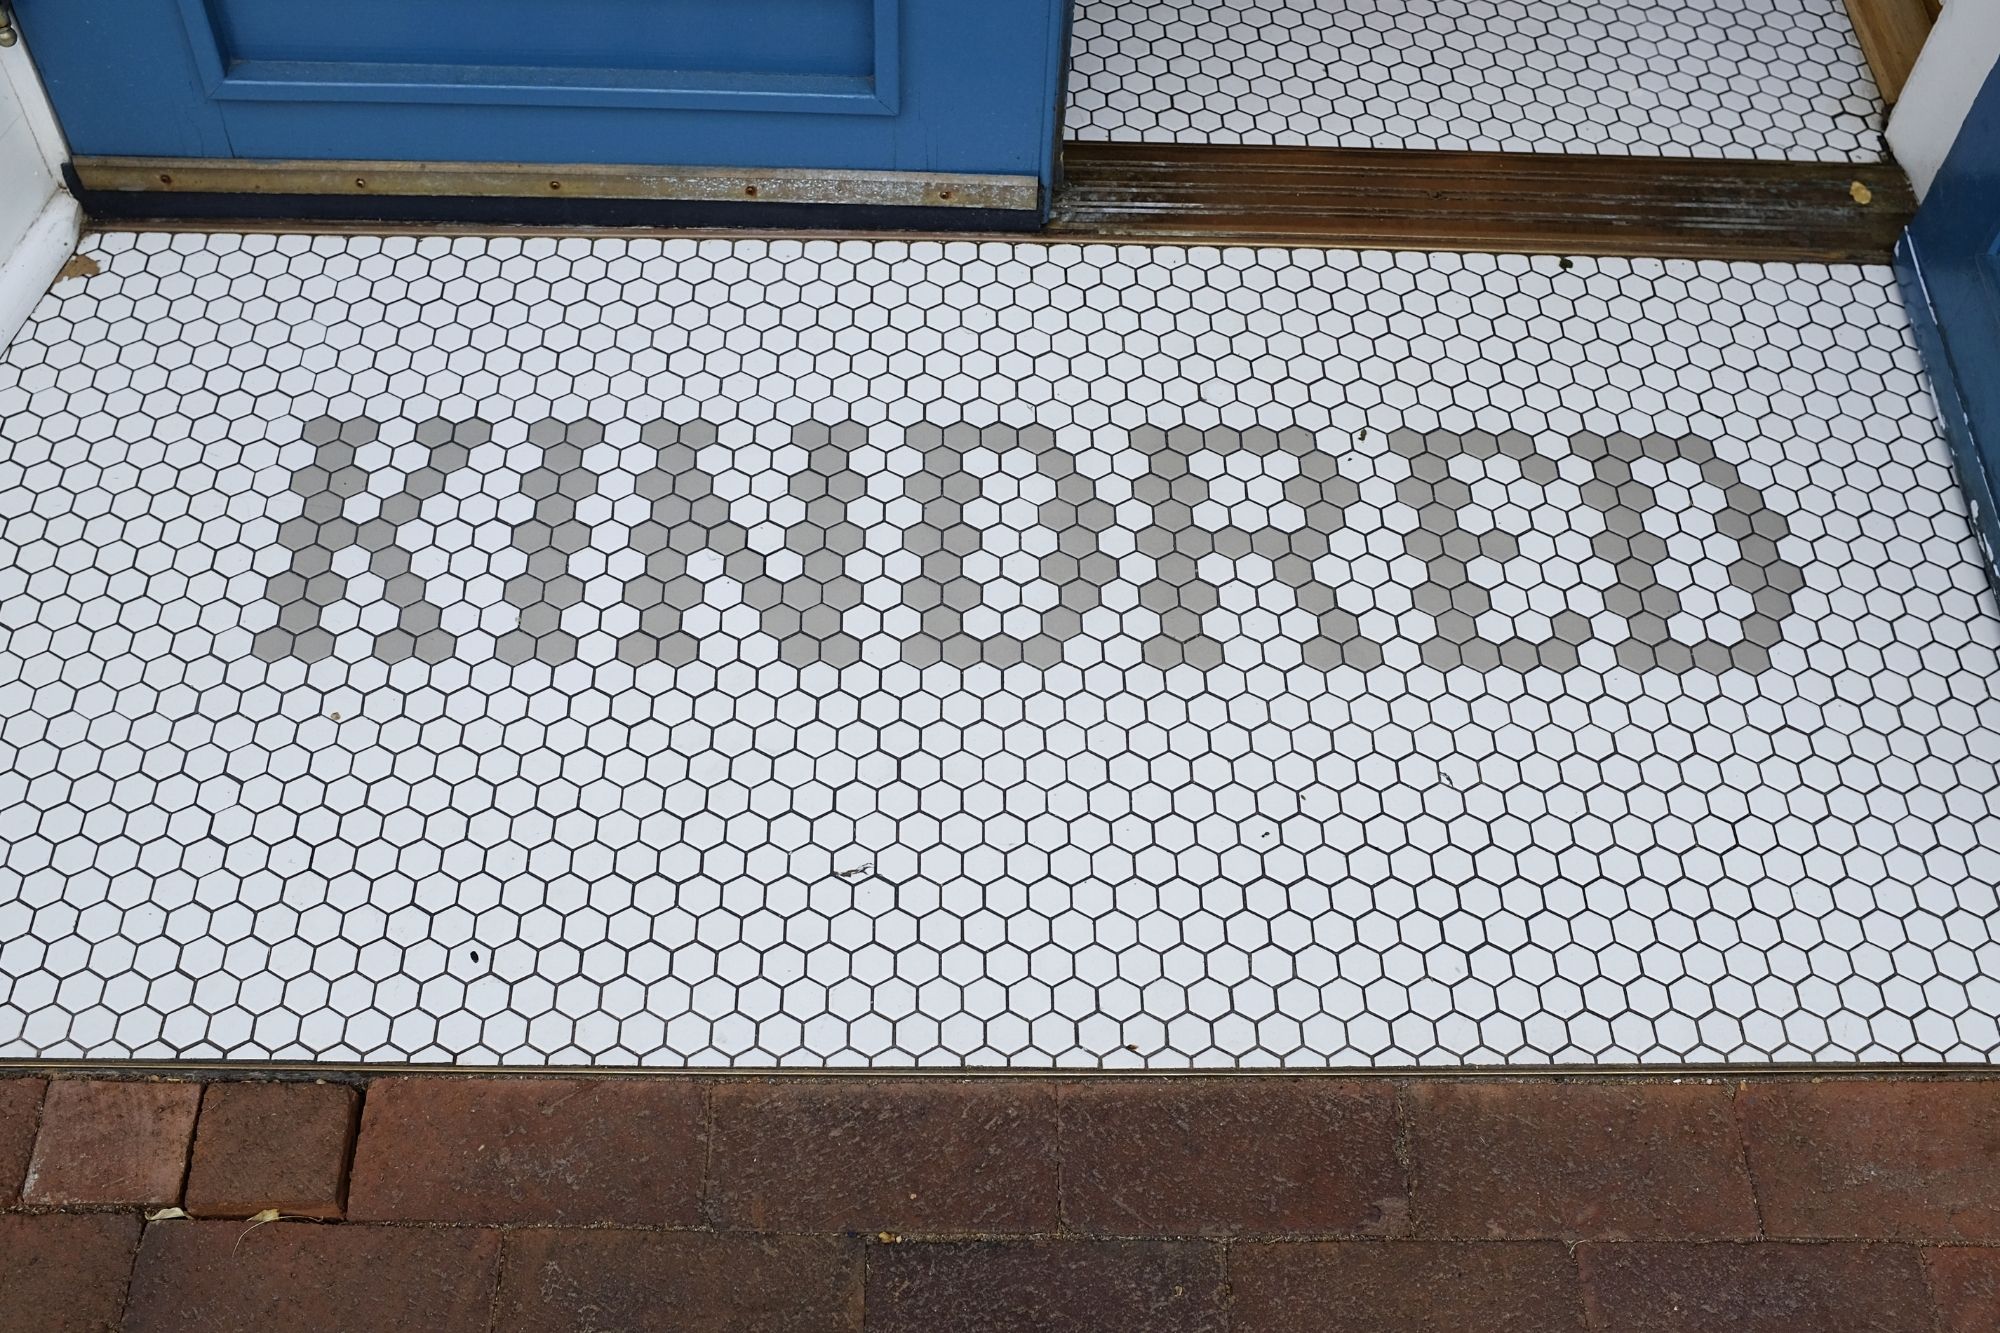 Tiled entrance that reads "KINDRED"